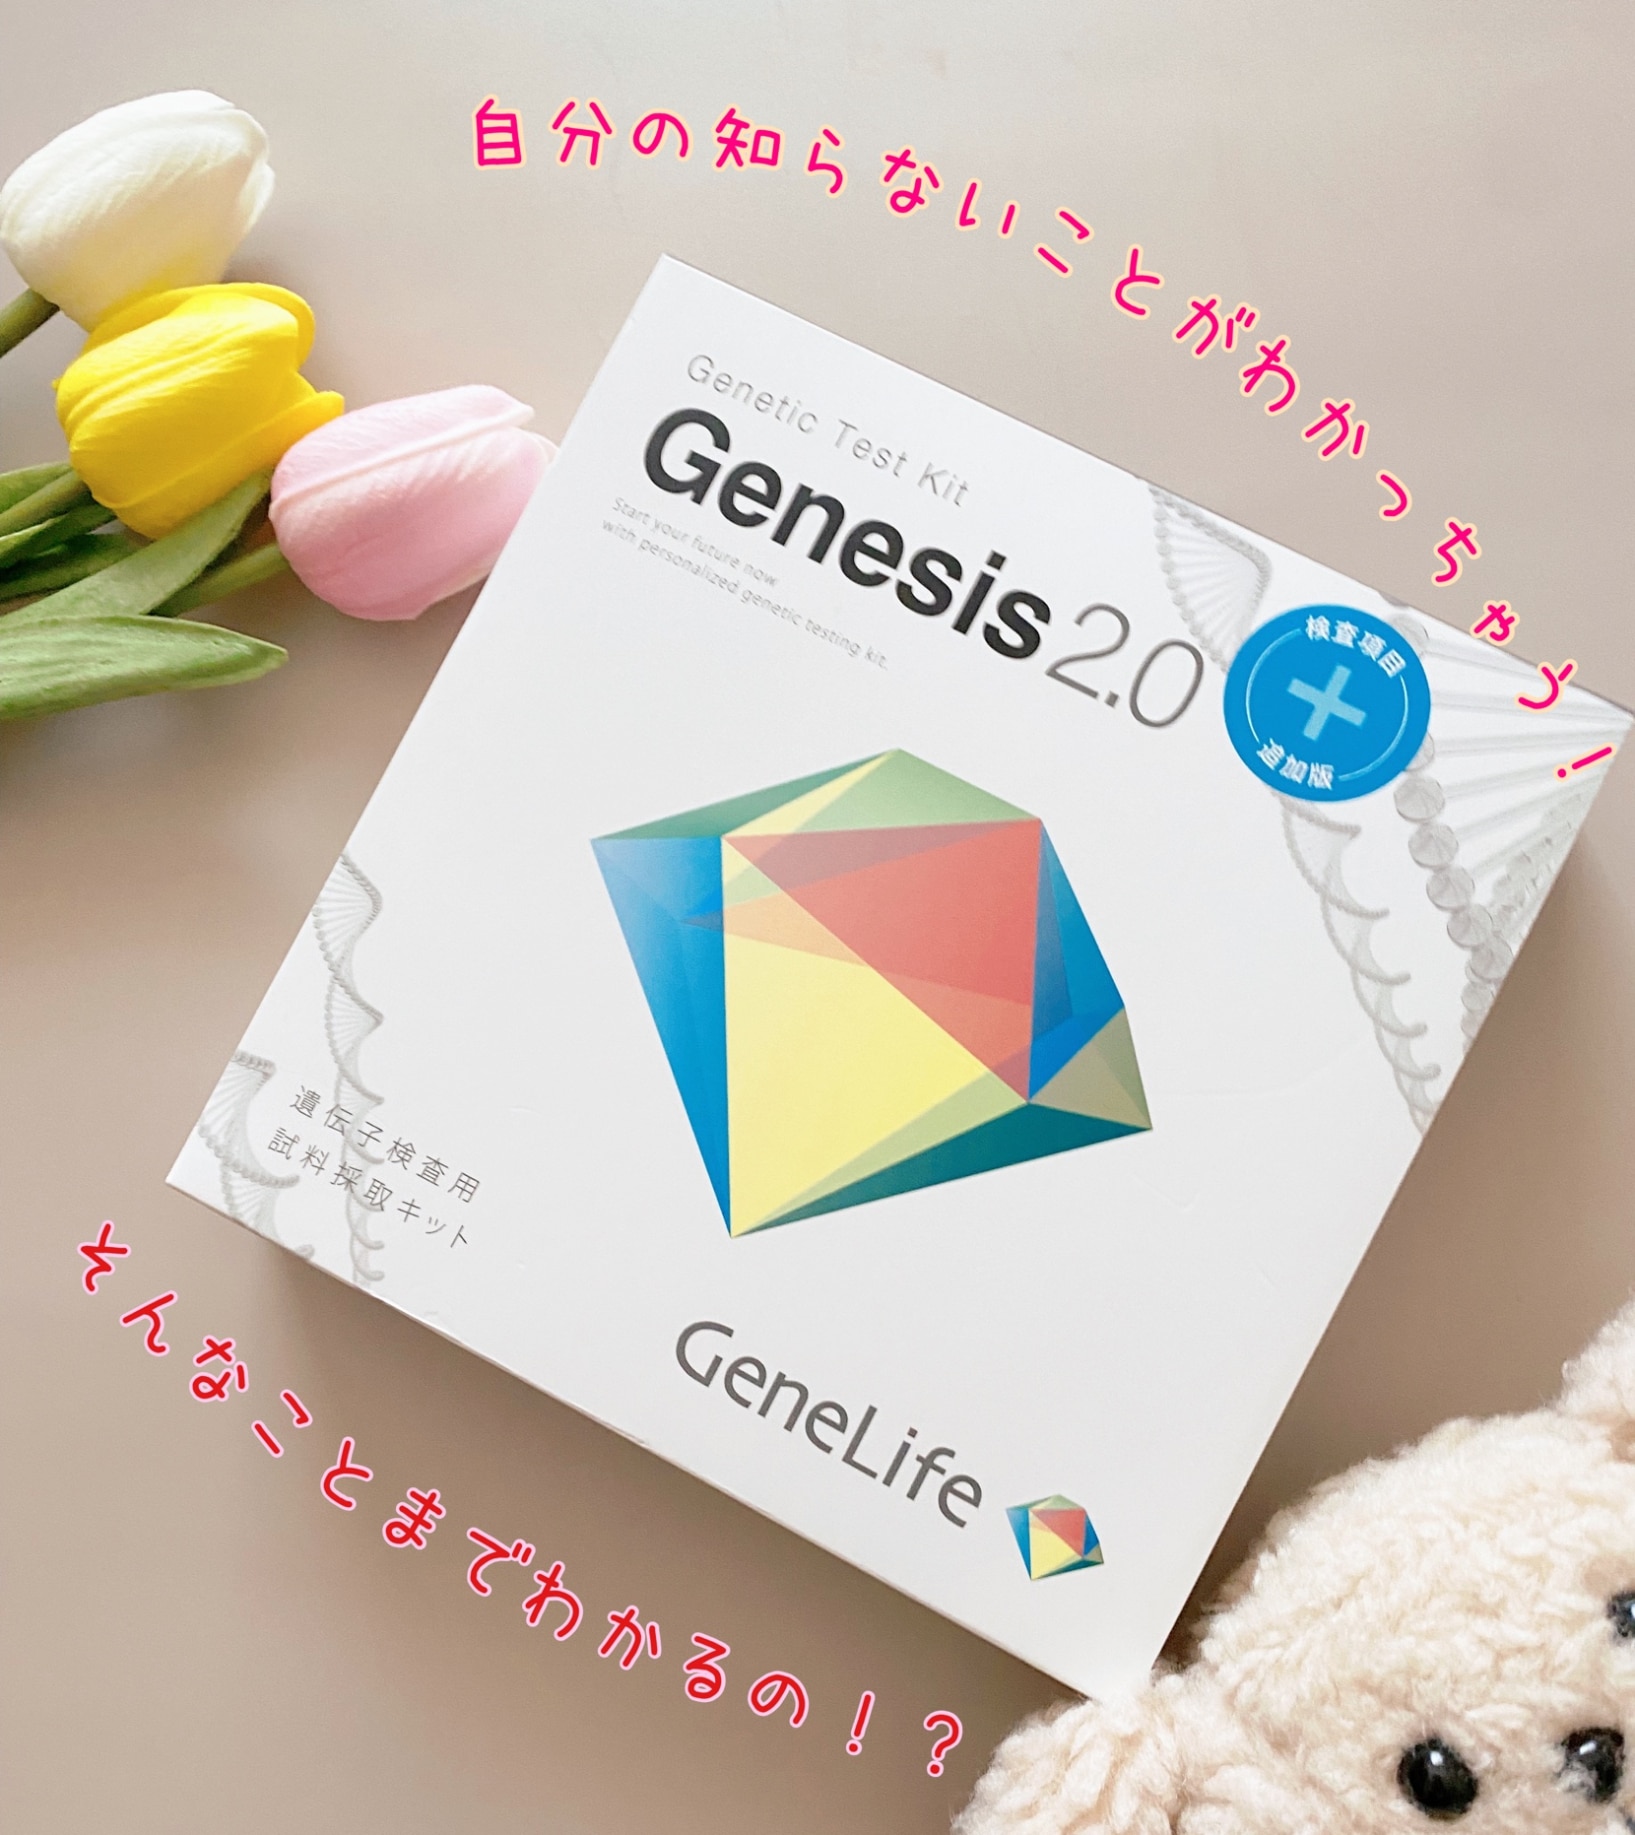 GeneLife Genesis2.0 Plus 360項目の遺伝子検査-